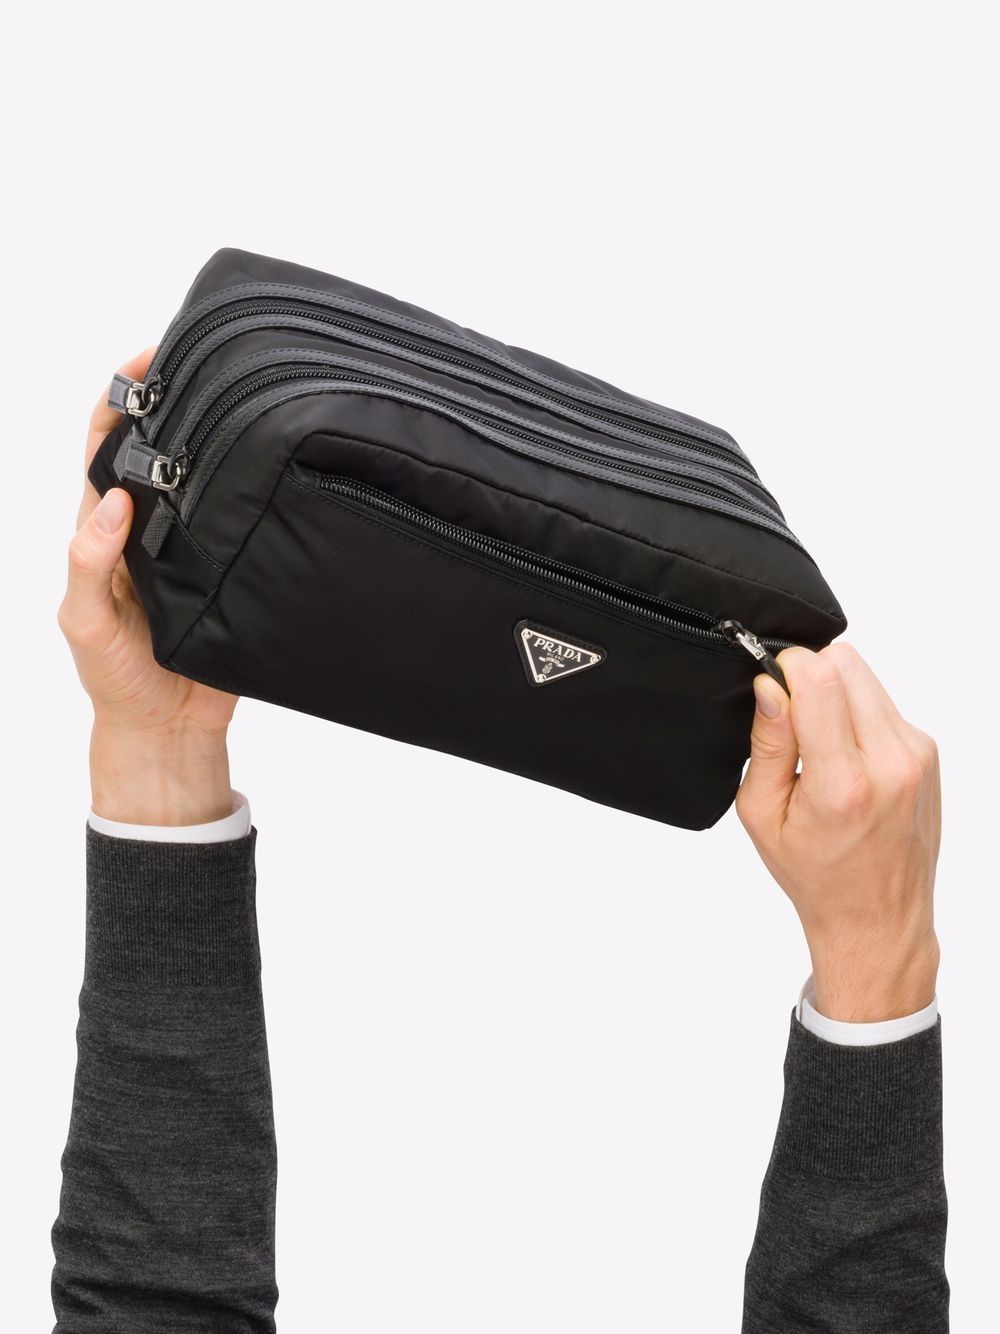 Prada Men's Saffiano Leather Travel Belt Bag/Fanny Pack